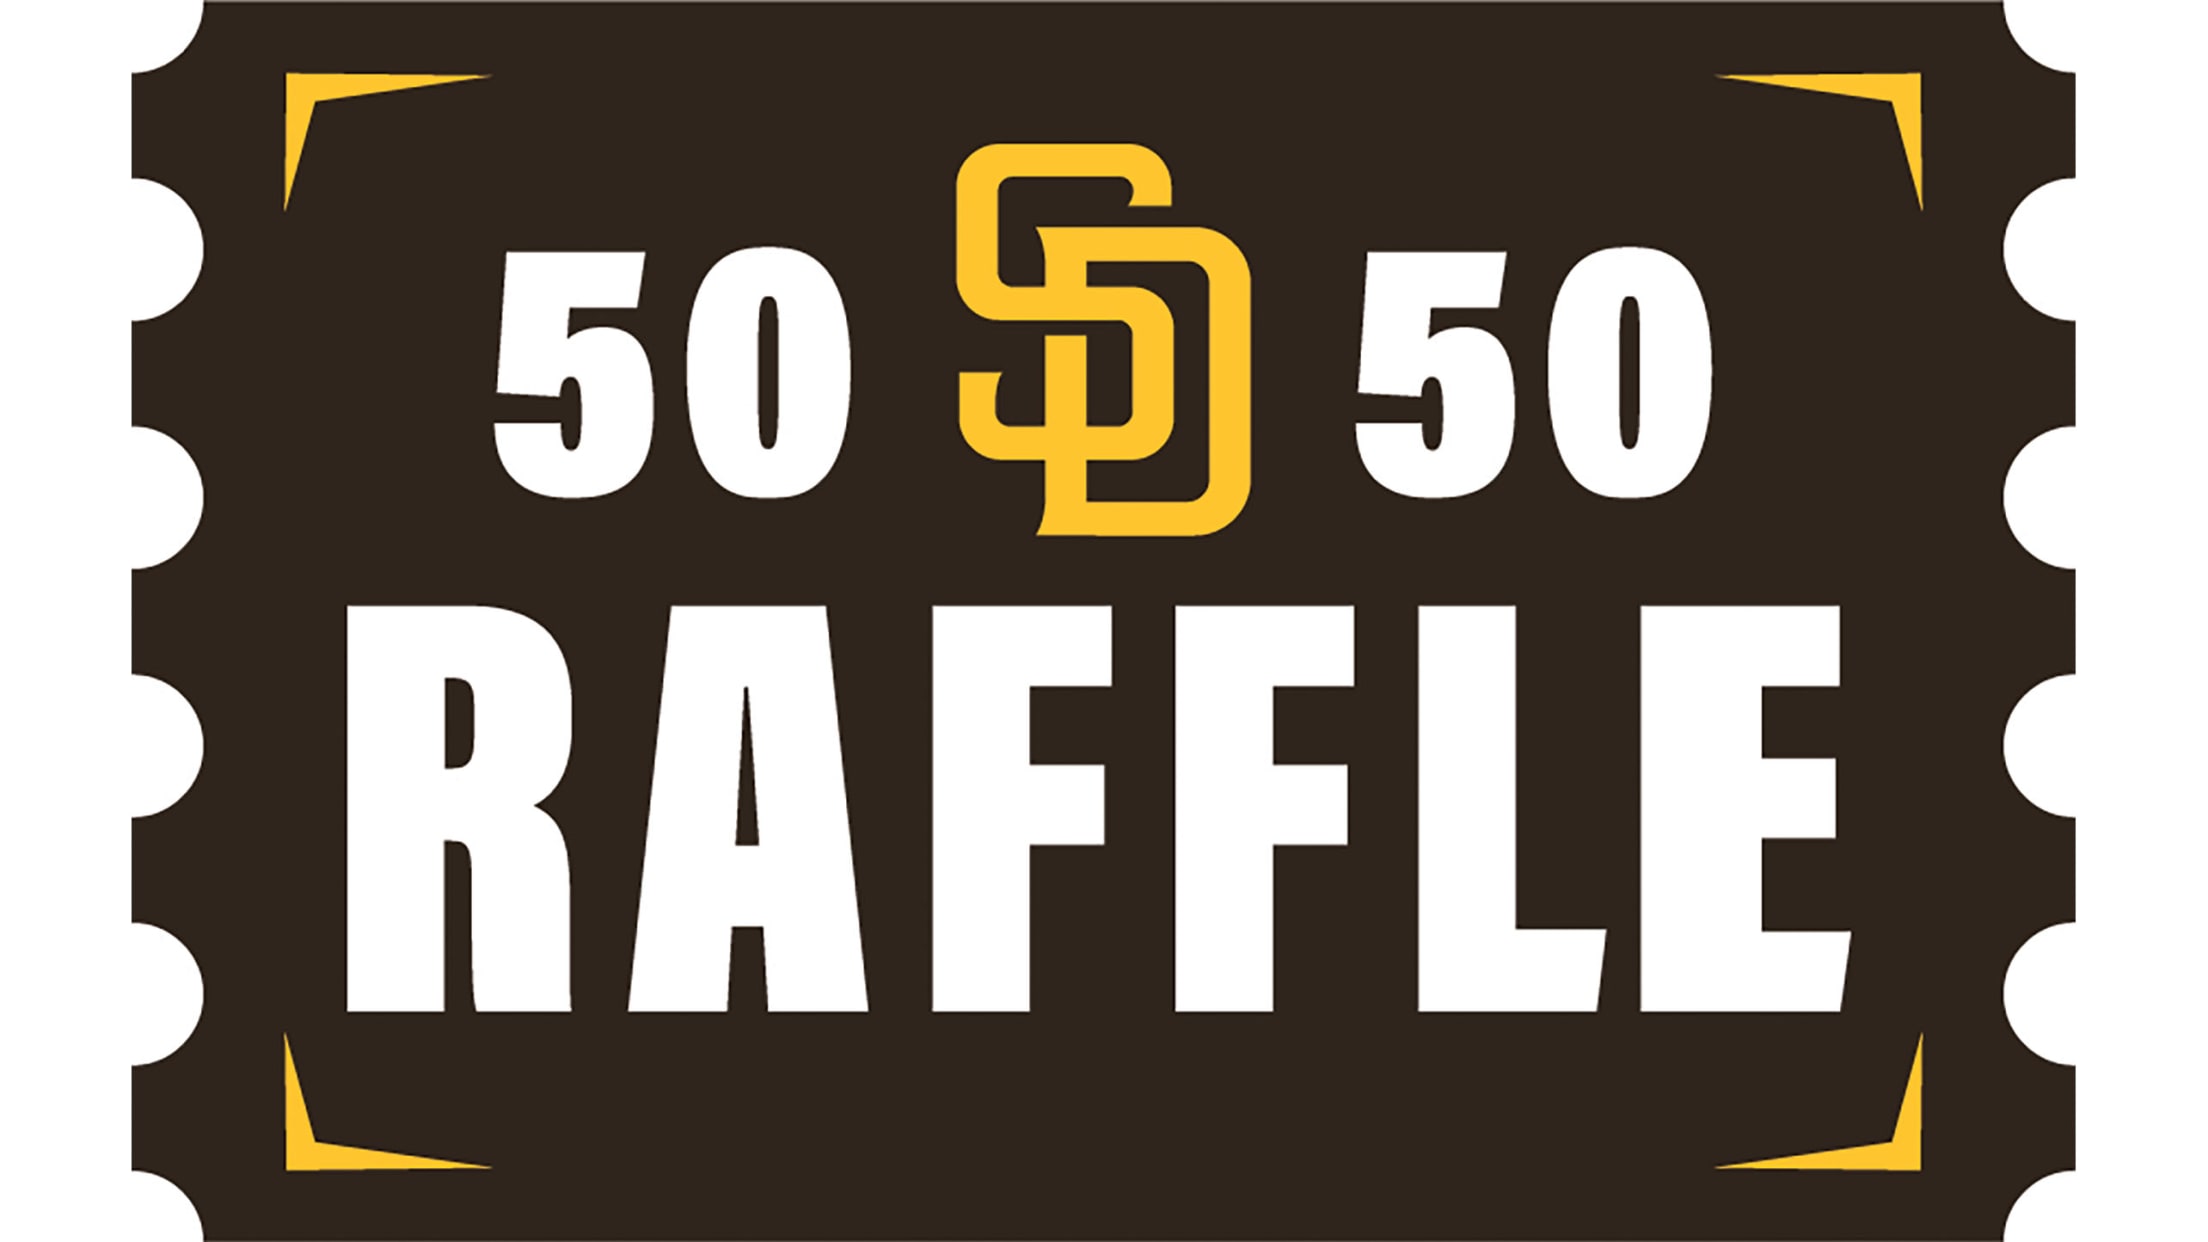 50/50 Raffle - Red Sox Foundation